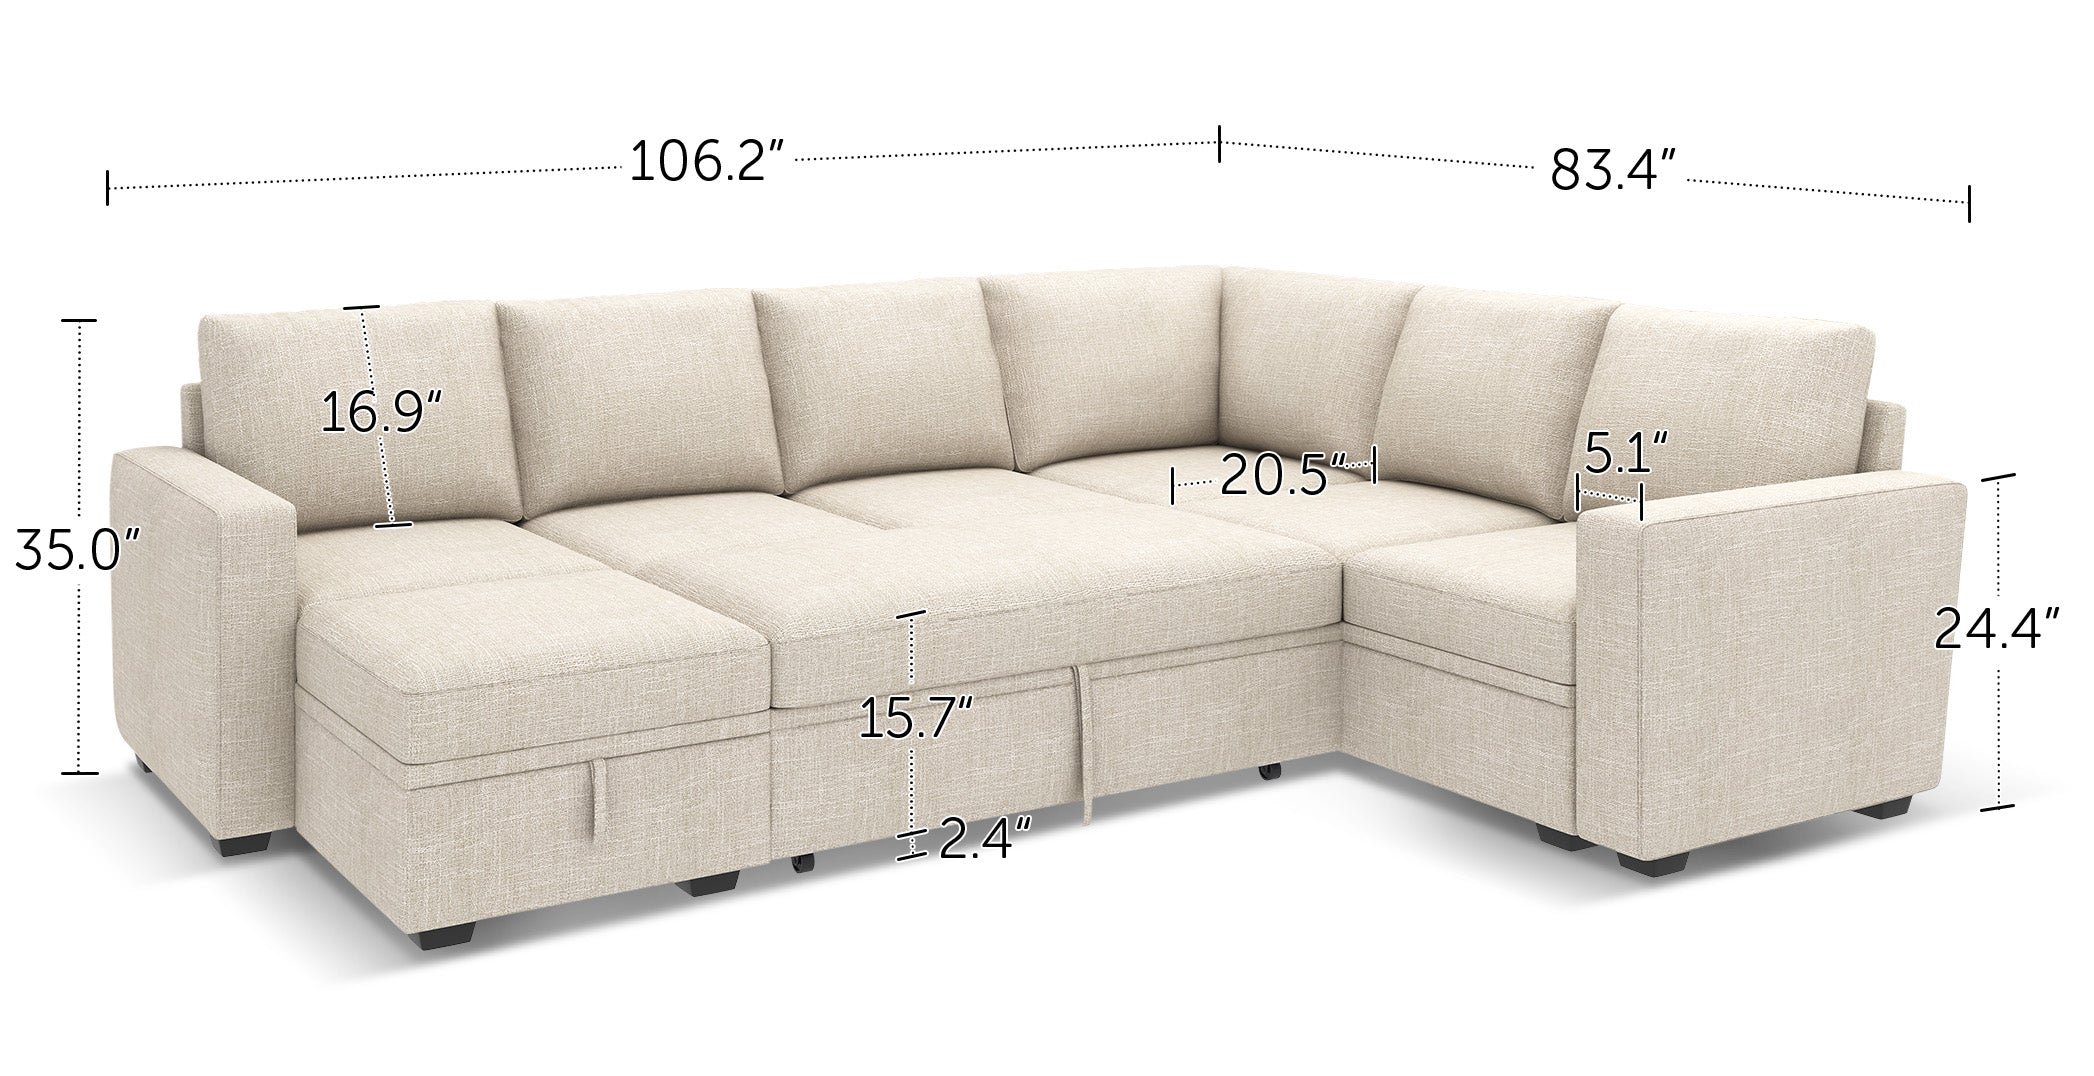 HONBAY Sleep Modular Sofa 7-Seat Sofa Bed with 4-Storage Space #Color_Beige